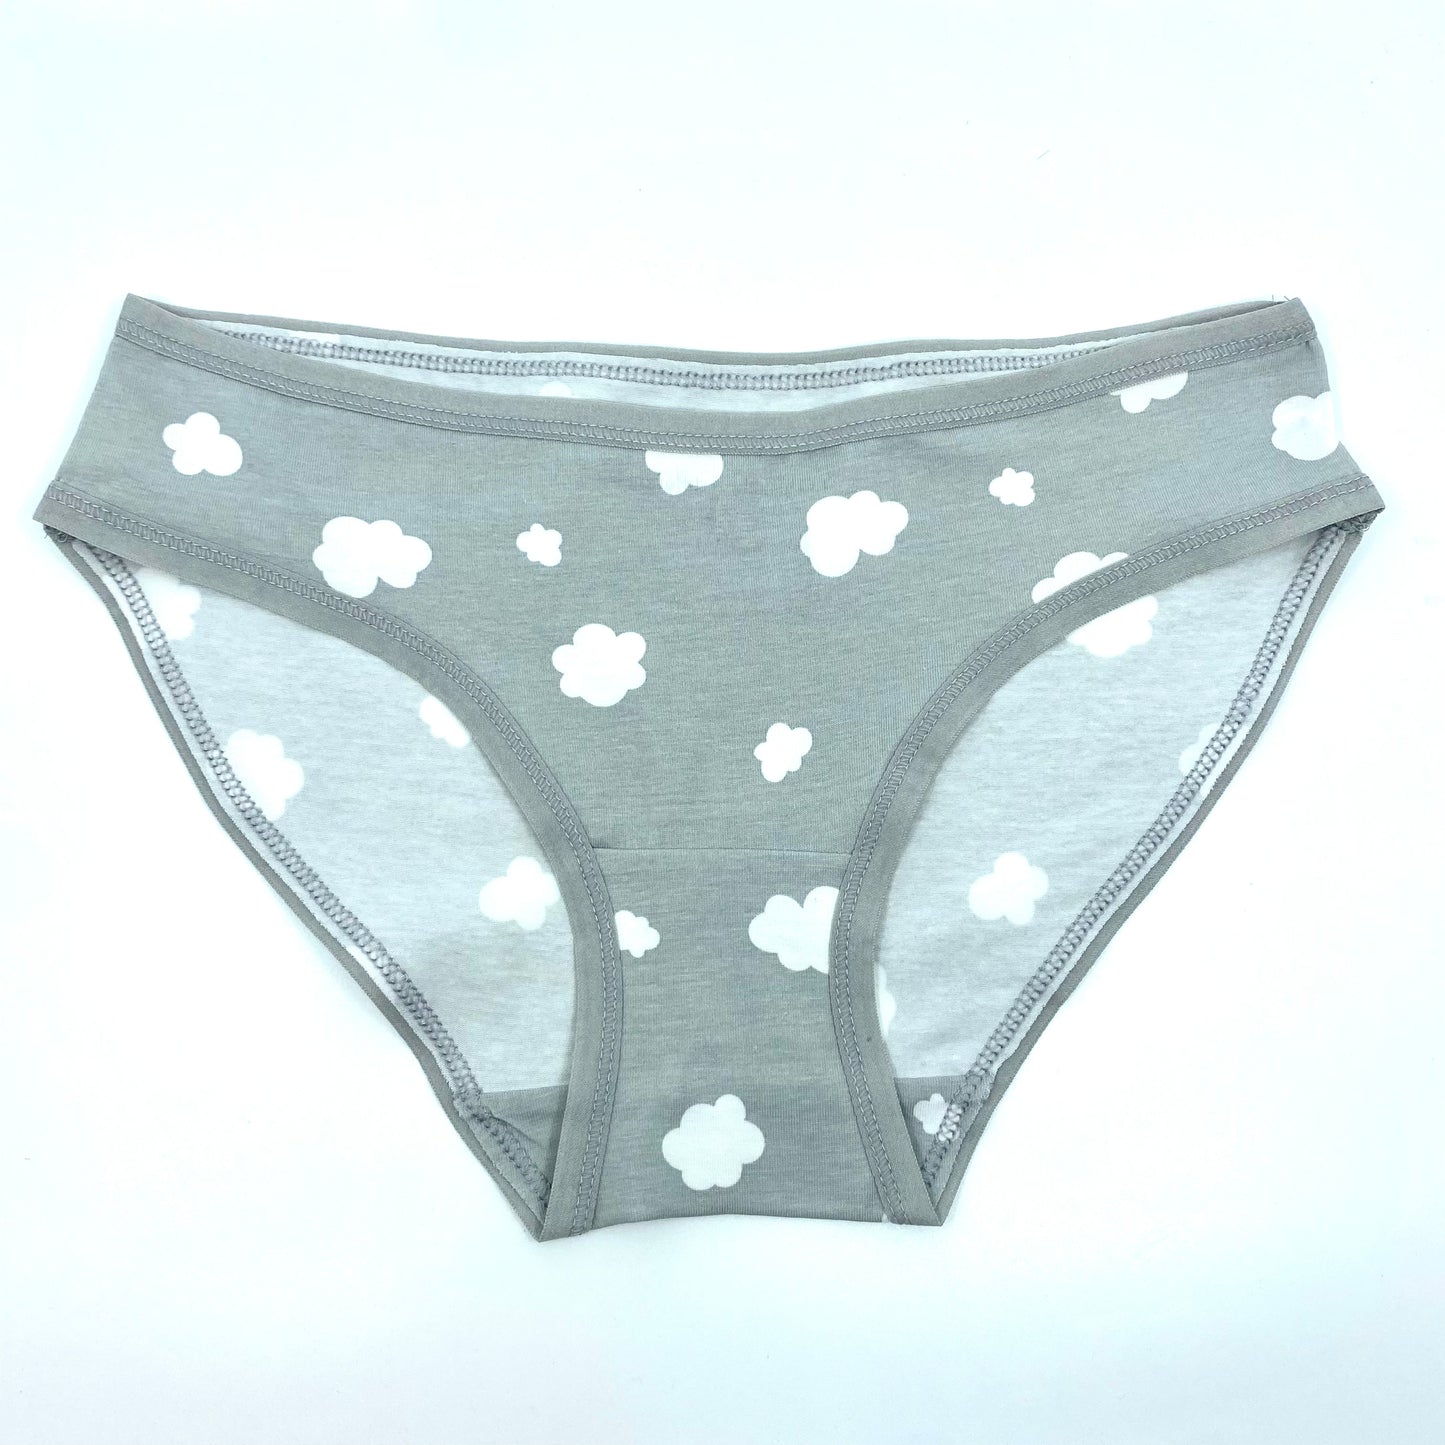 Women's organic cotton low-rise bikini bottoms - grey with white clouds